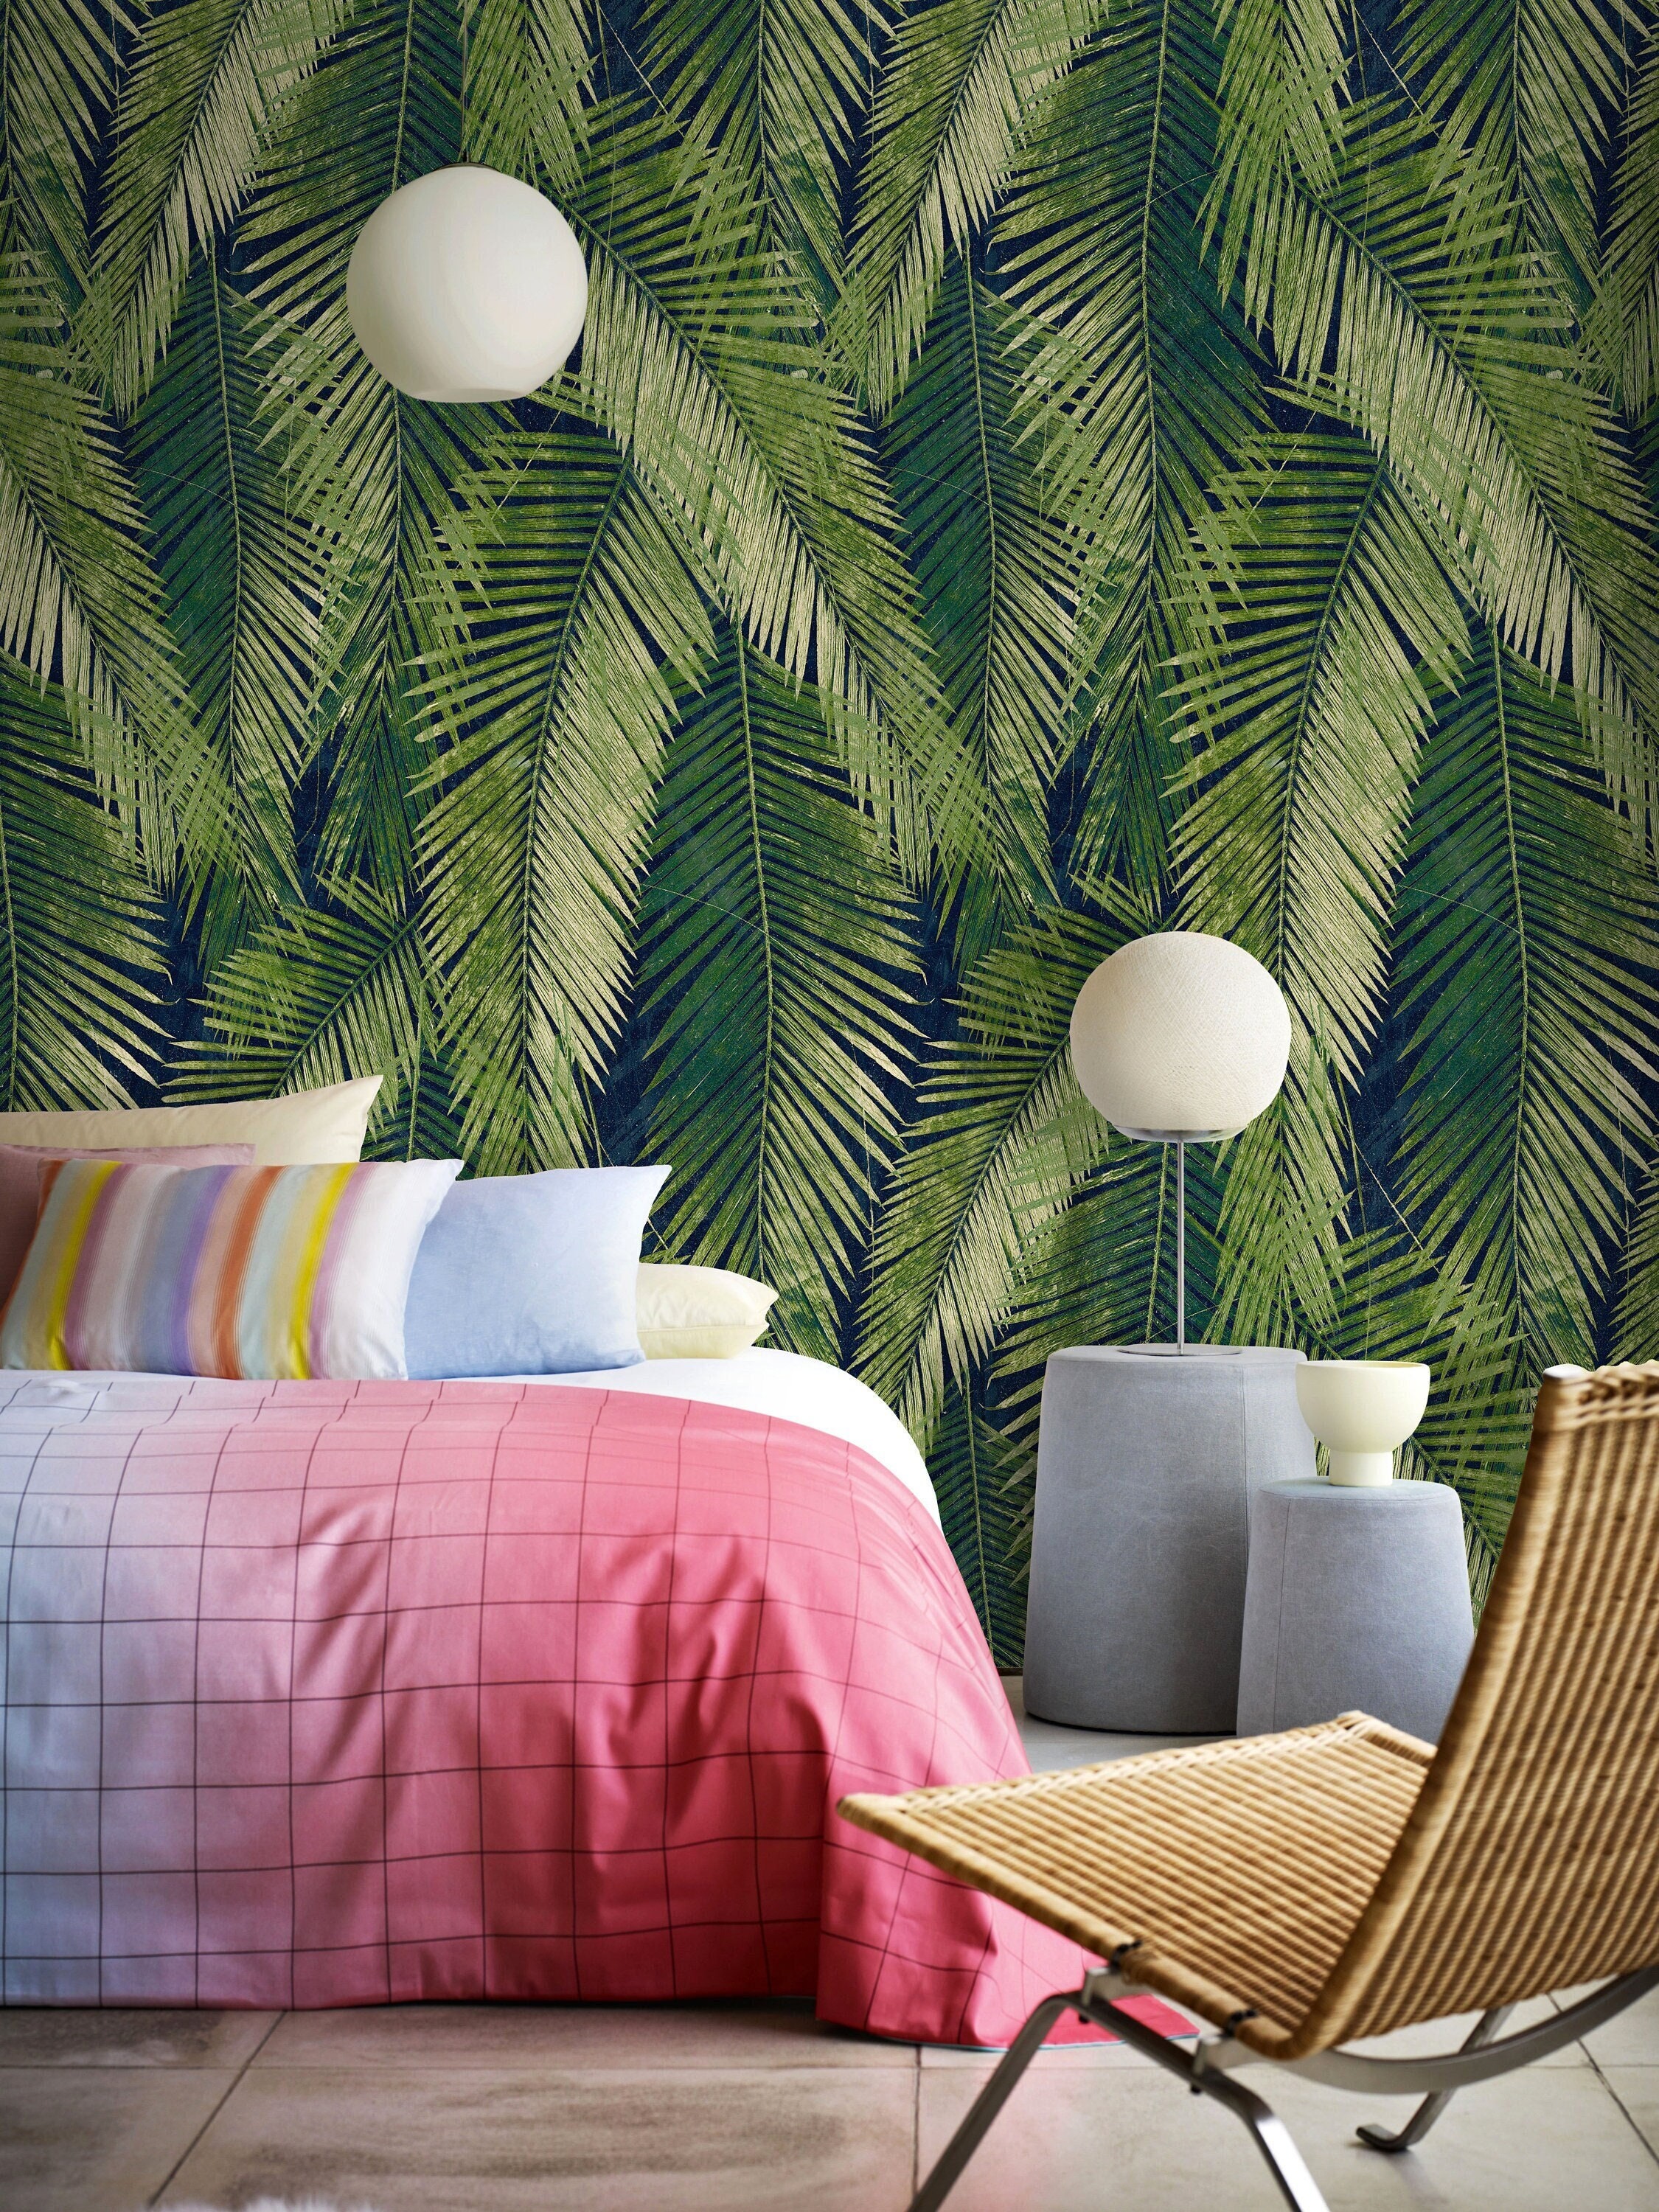 Dark Jungle Large Palm Leaf Wallpaper Emerald Green Dark image pic